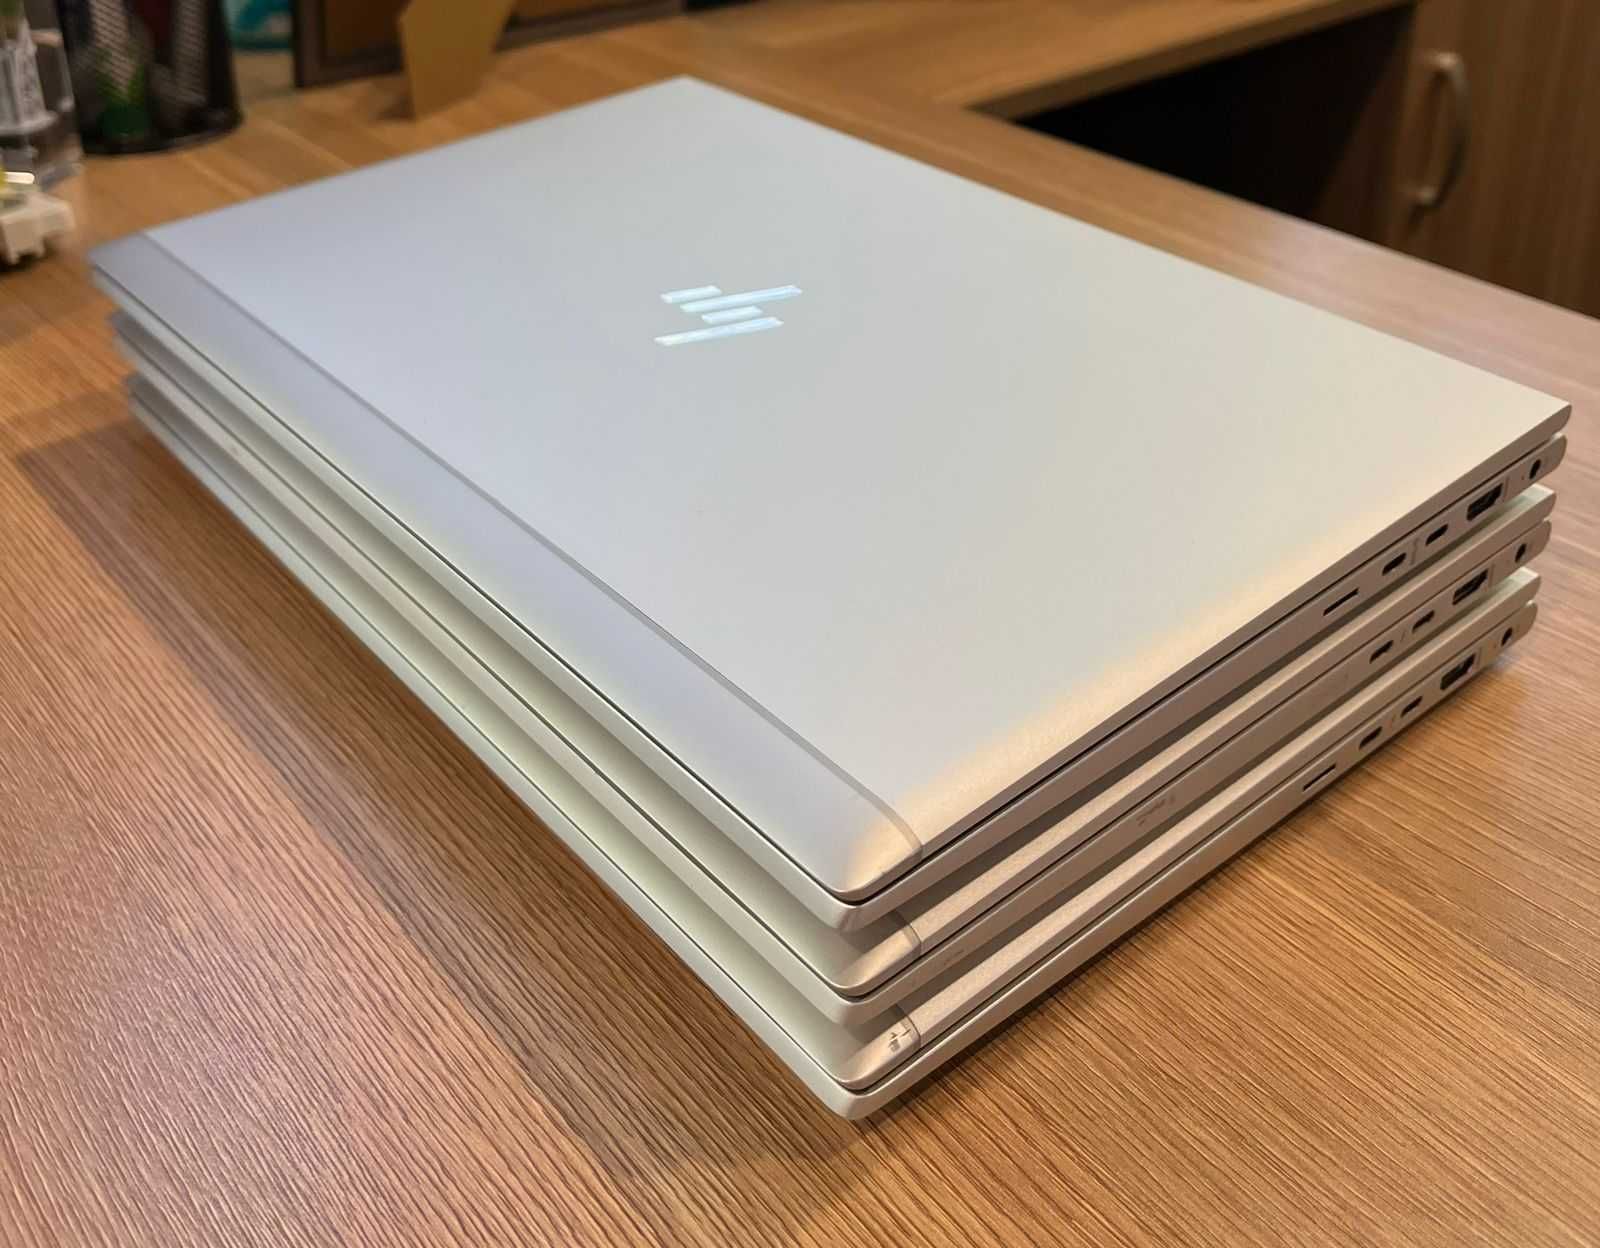 Ноутбук HP EliteBook 845 G7  (Ryzen 7 PRO 4750U 1.7/4.1 GHz 8/16).